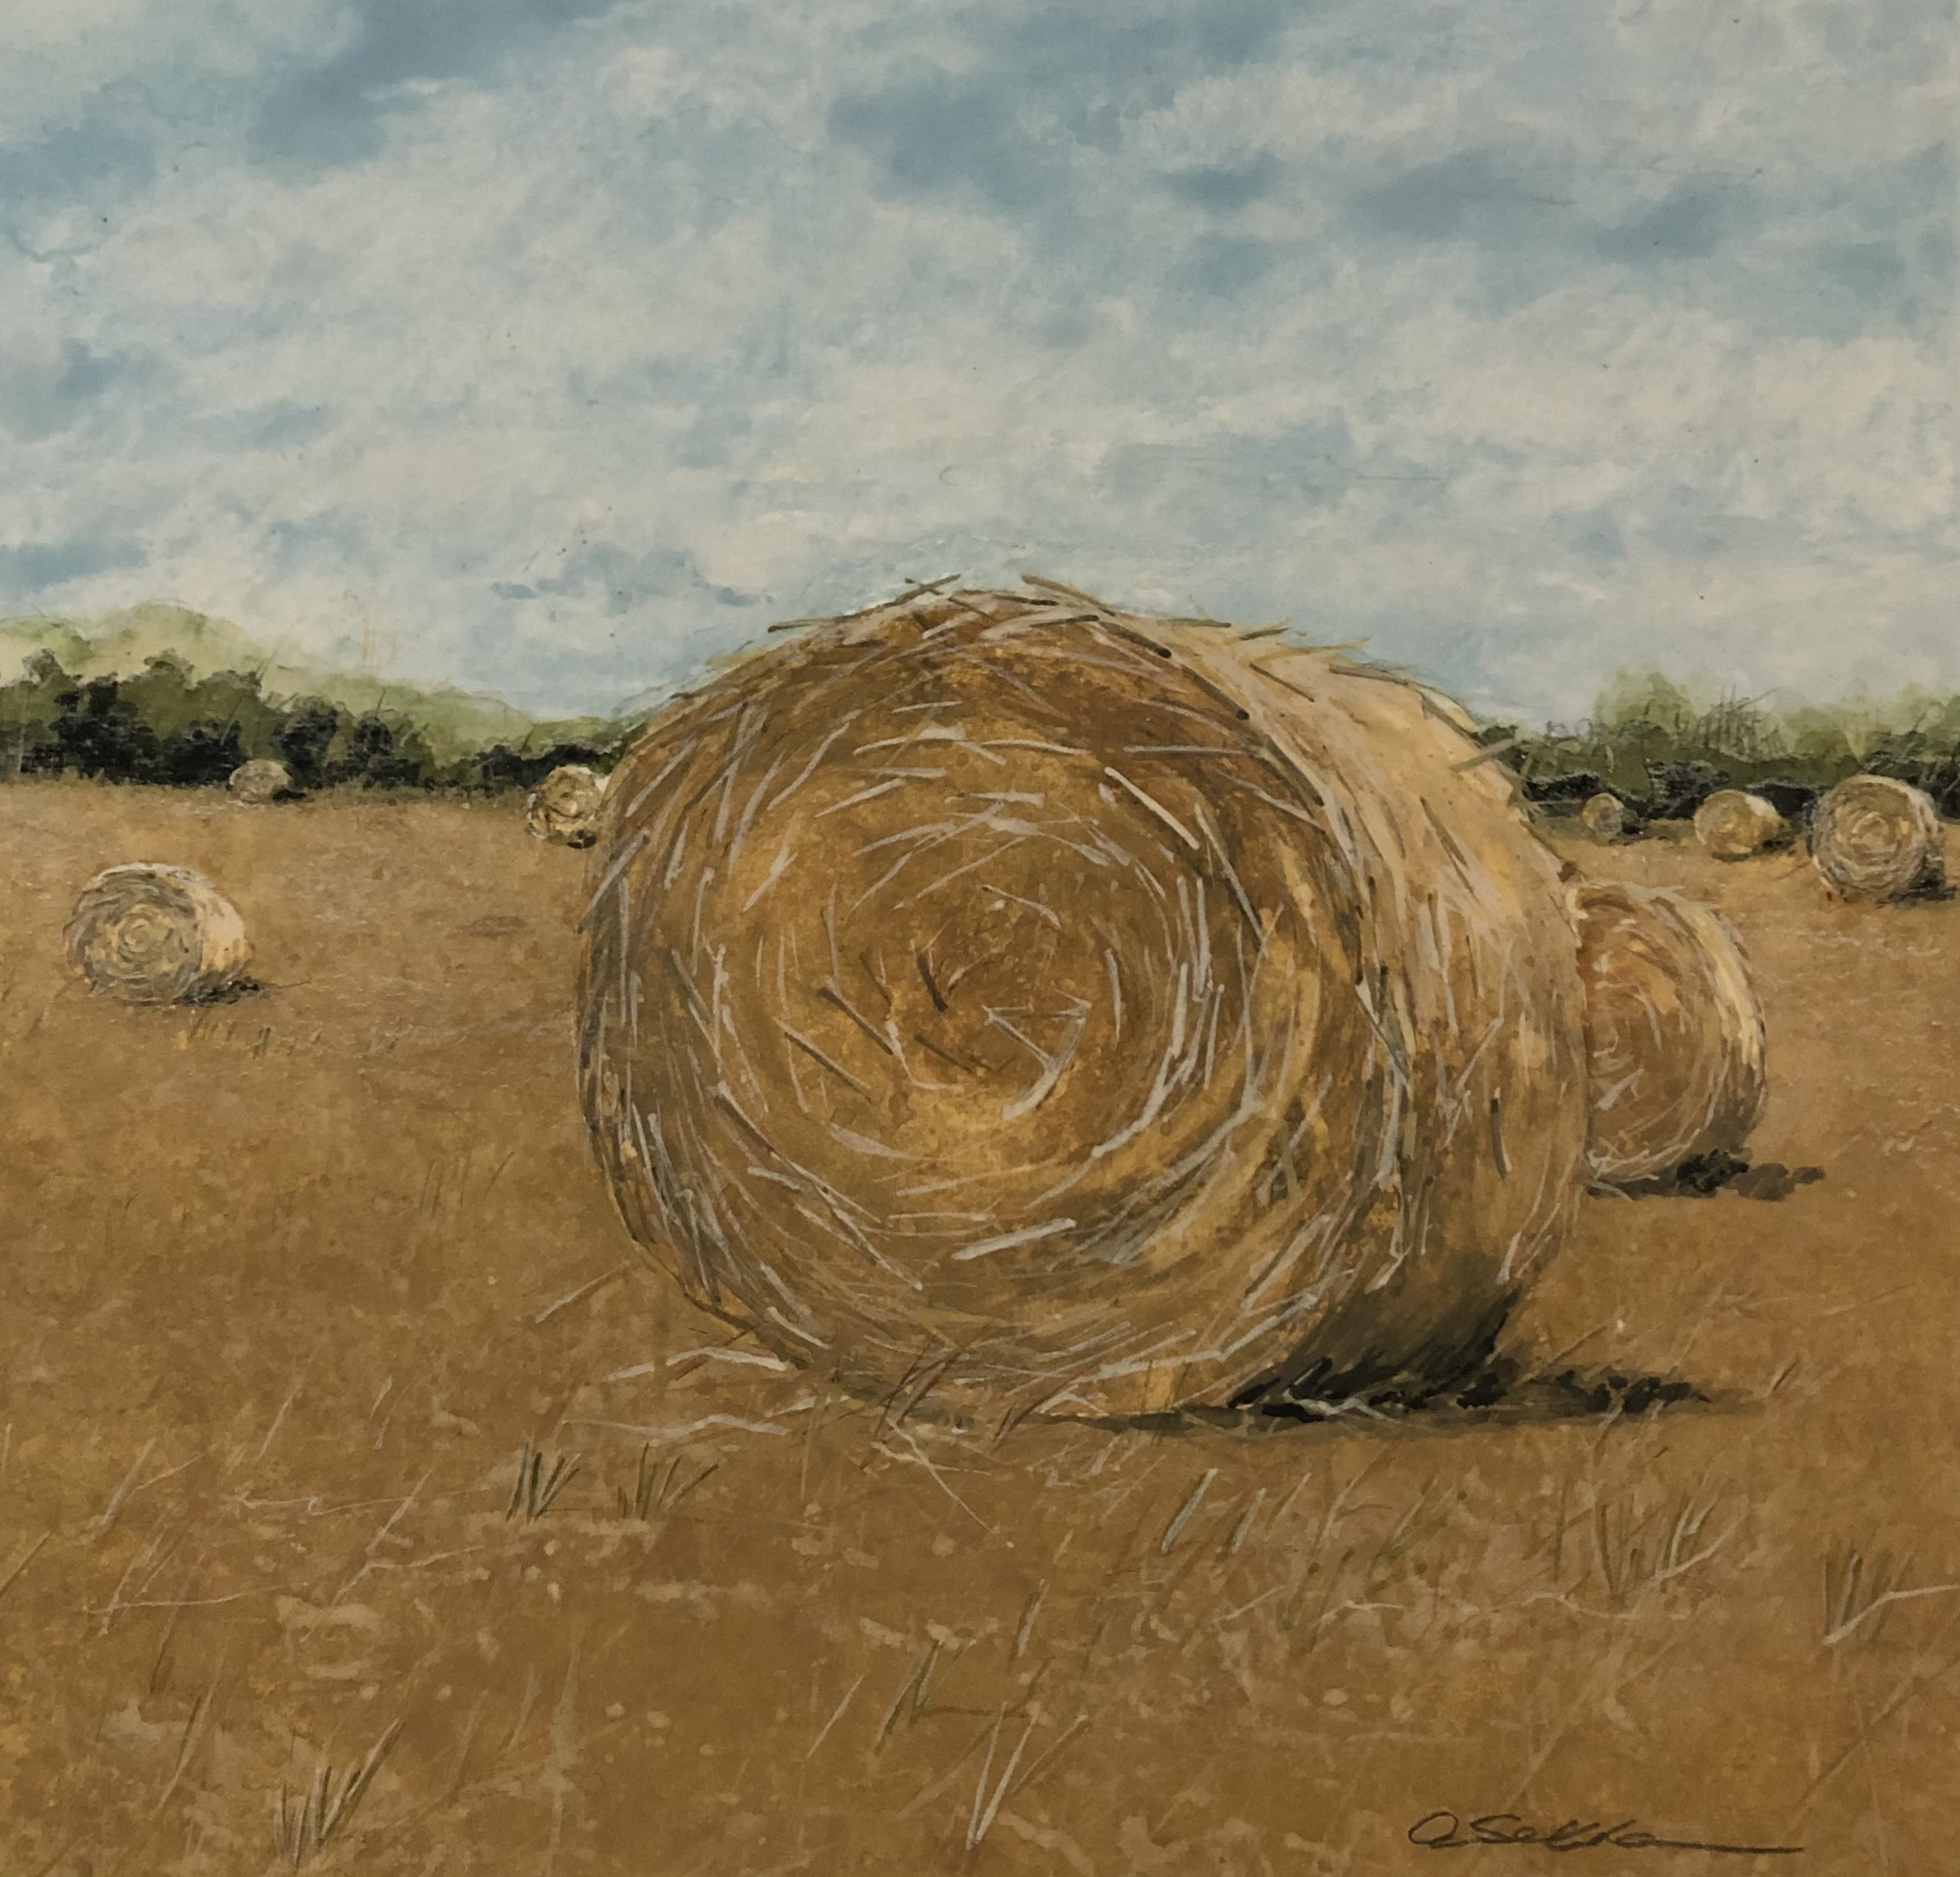 Cinnamon Roll, Portrait of a Hay Bale